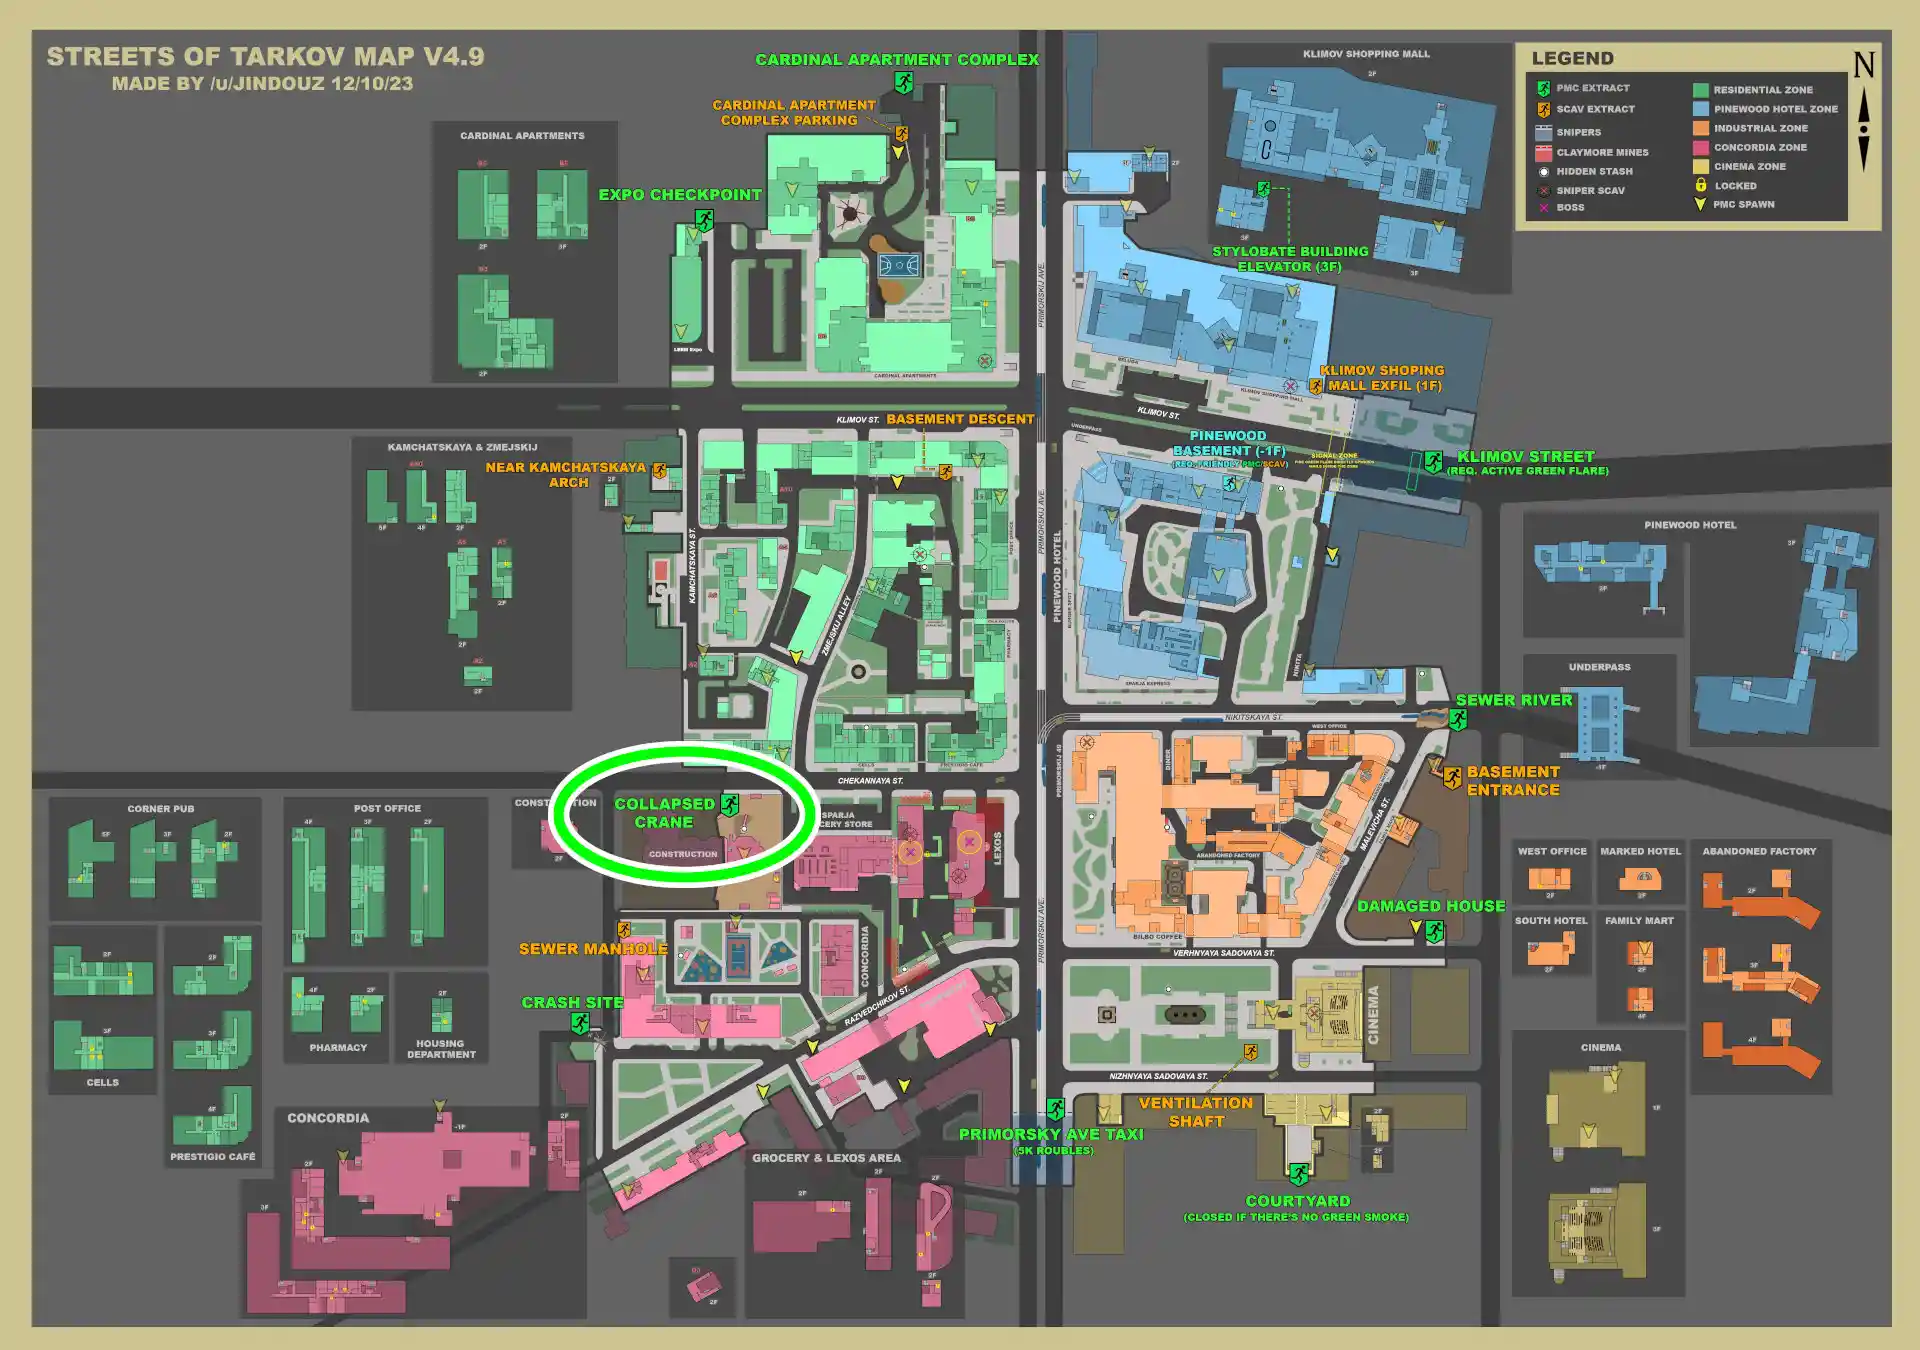 STREETS_OF_TARKOV-ESC-Collapsed_Crane-MAP.jpg